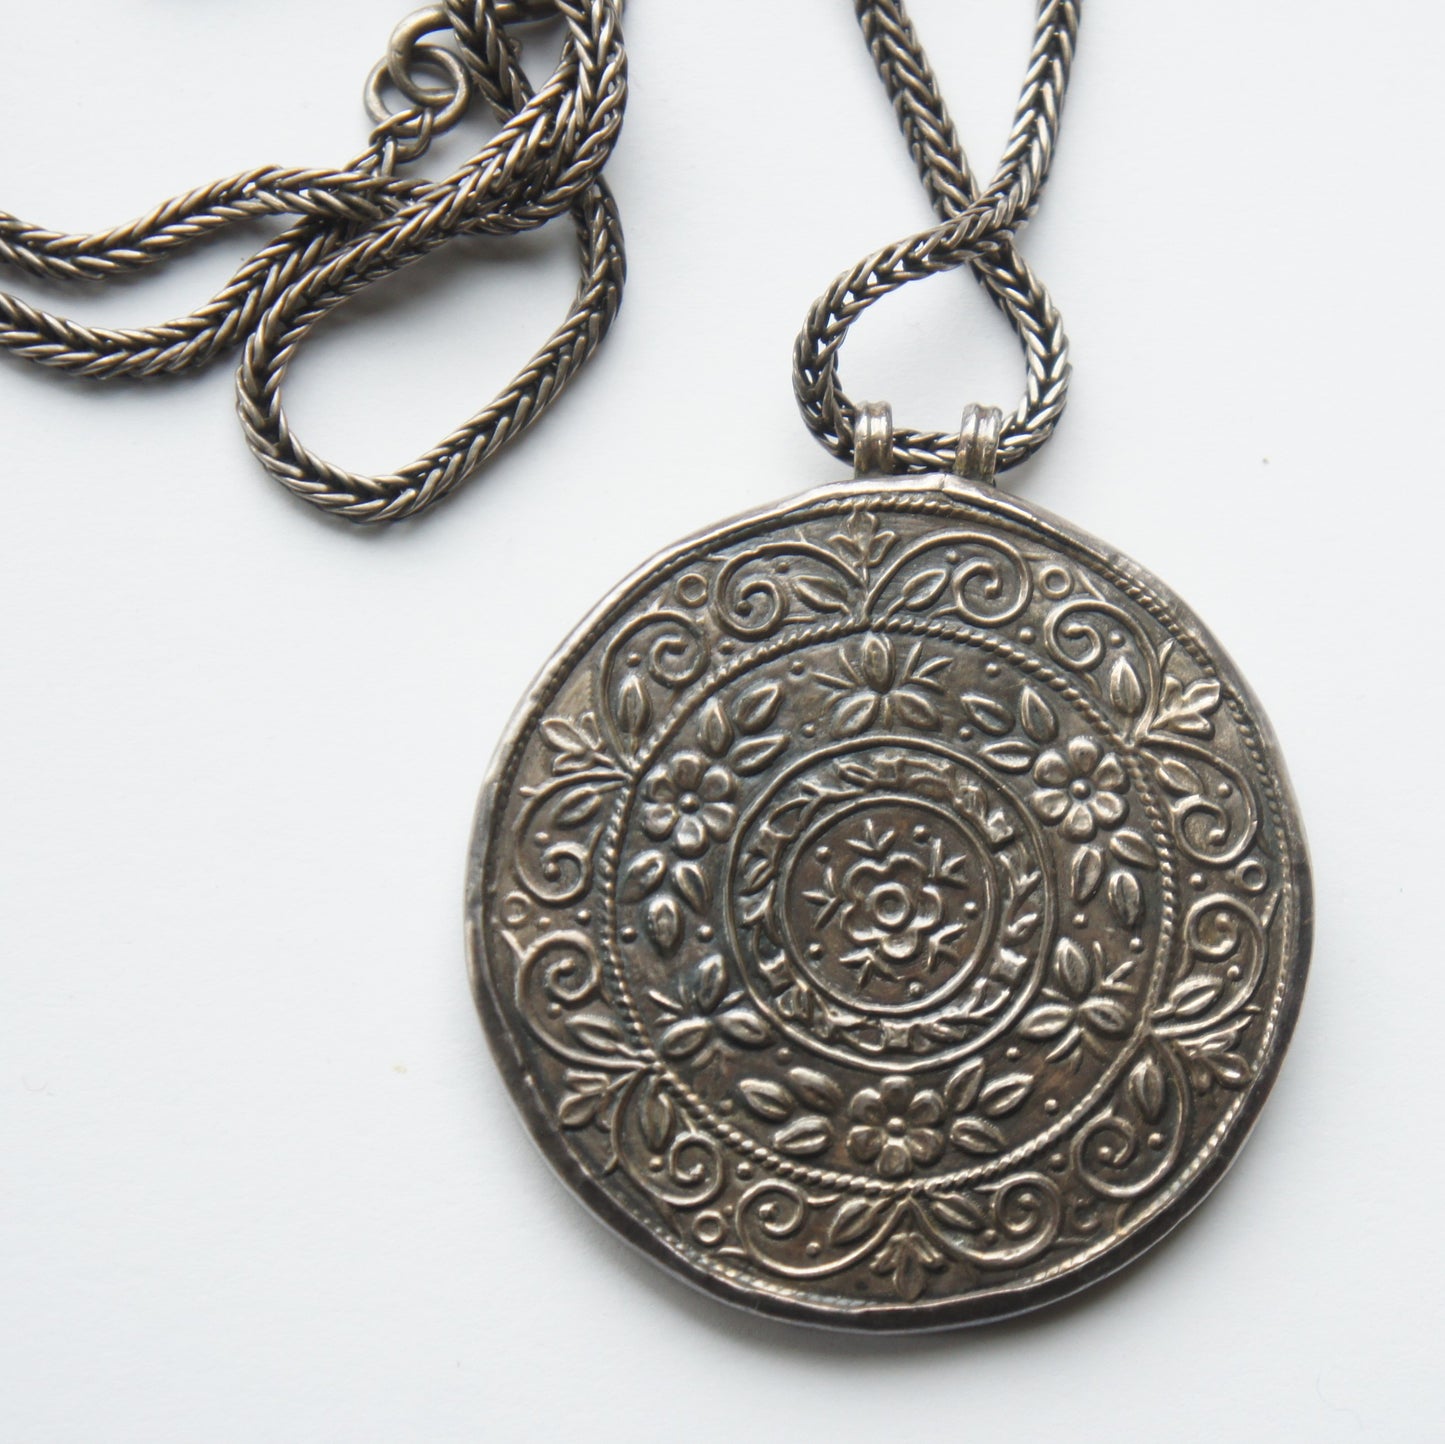 Antique India Ganesha Repousse Silver Hand Painted Amulet Pendant Necklace Medallion